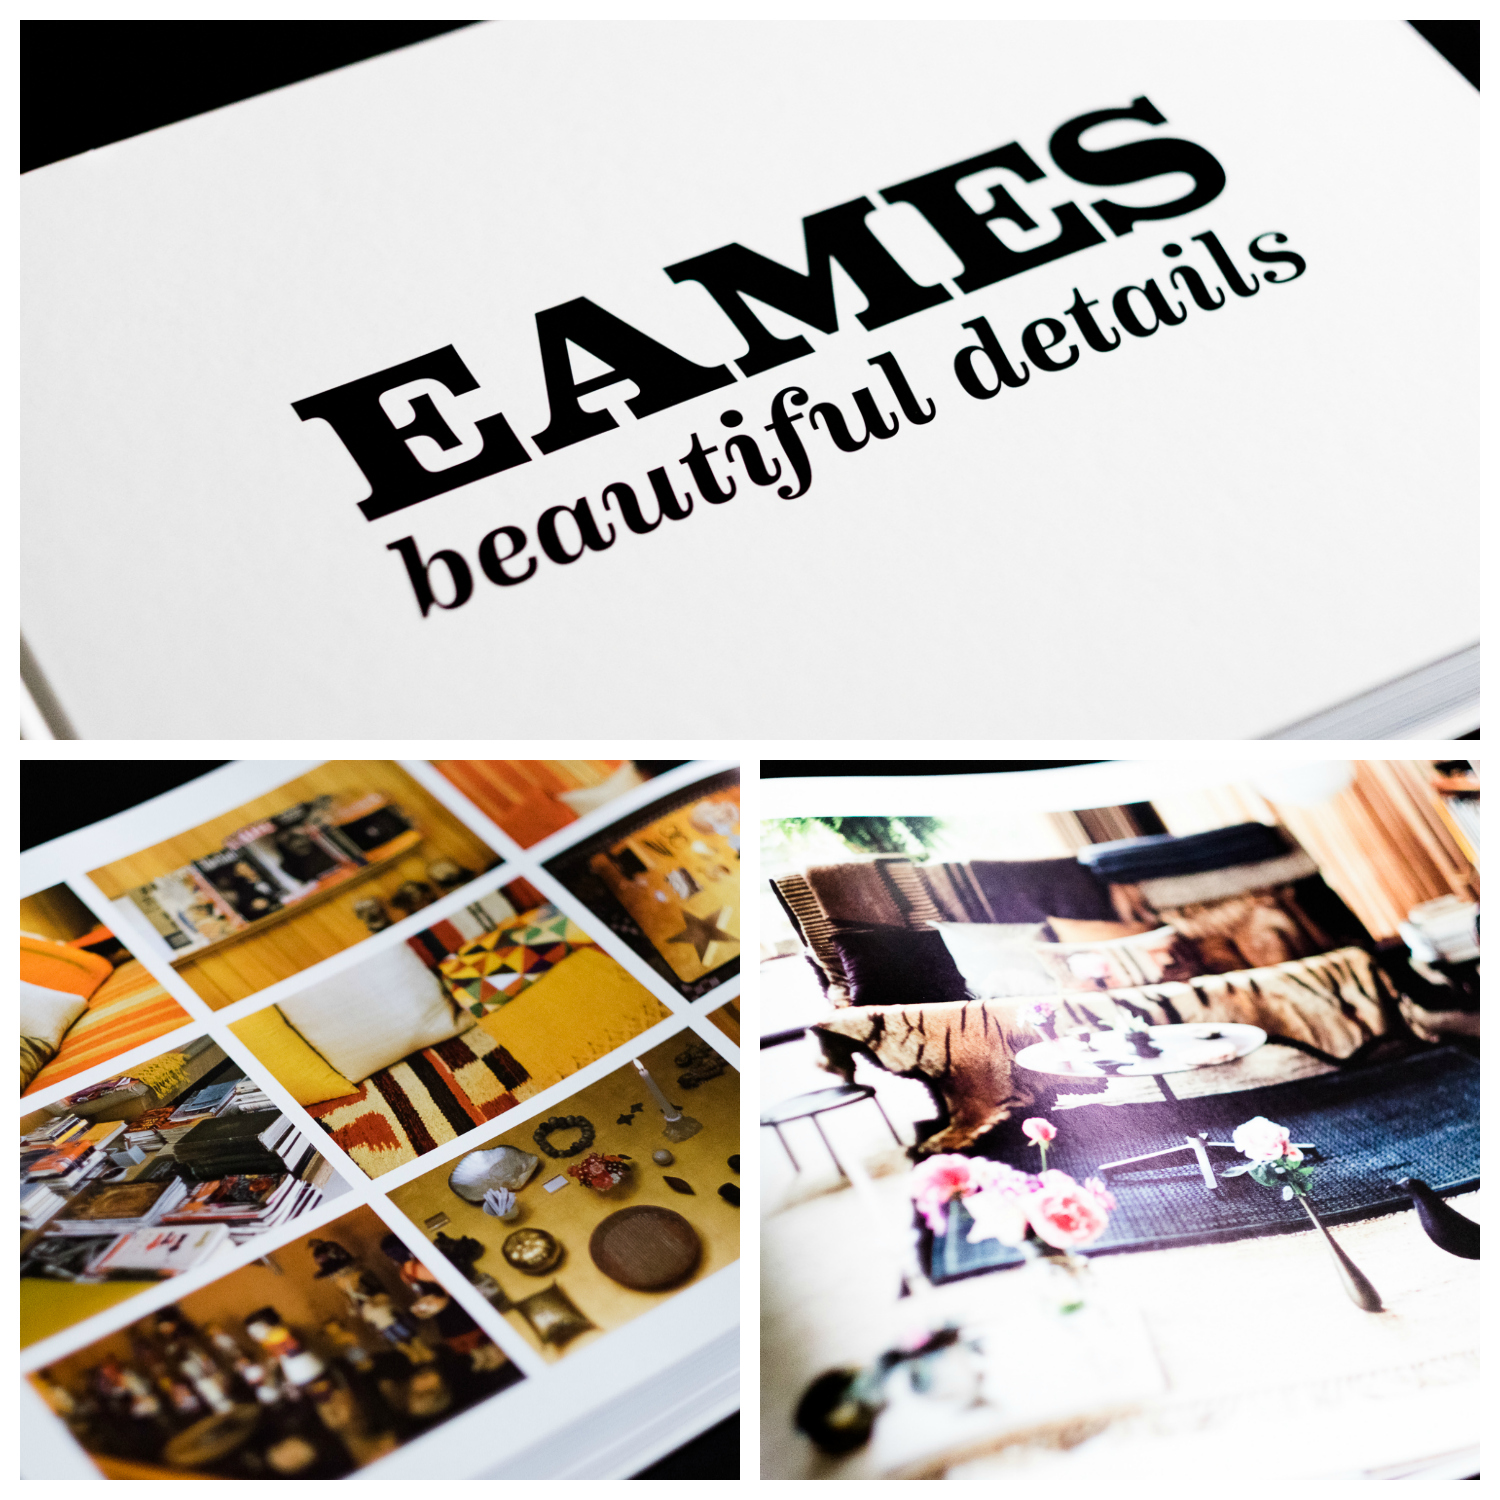 eames-beautiful-details